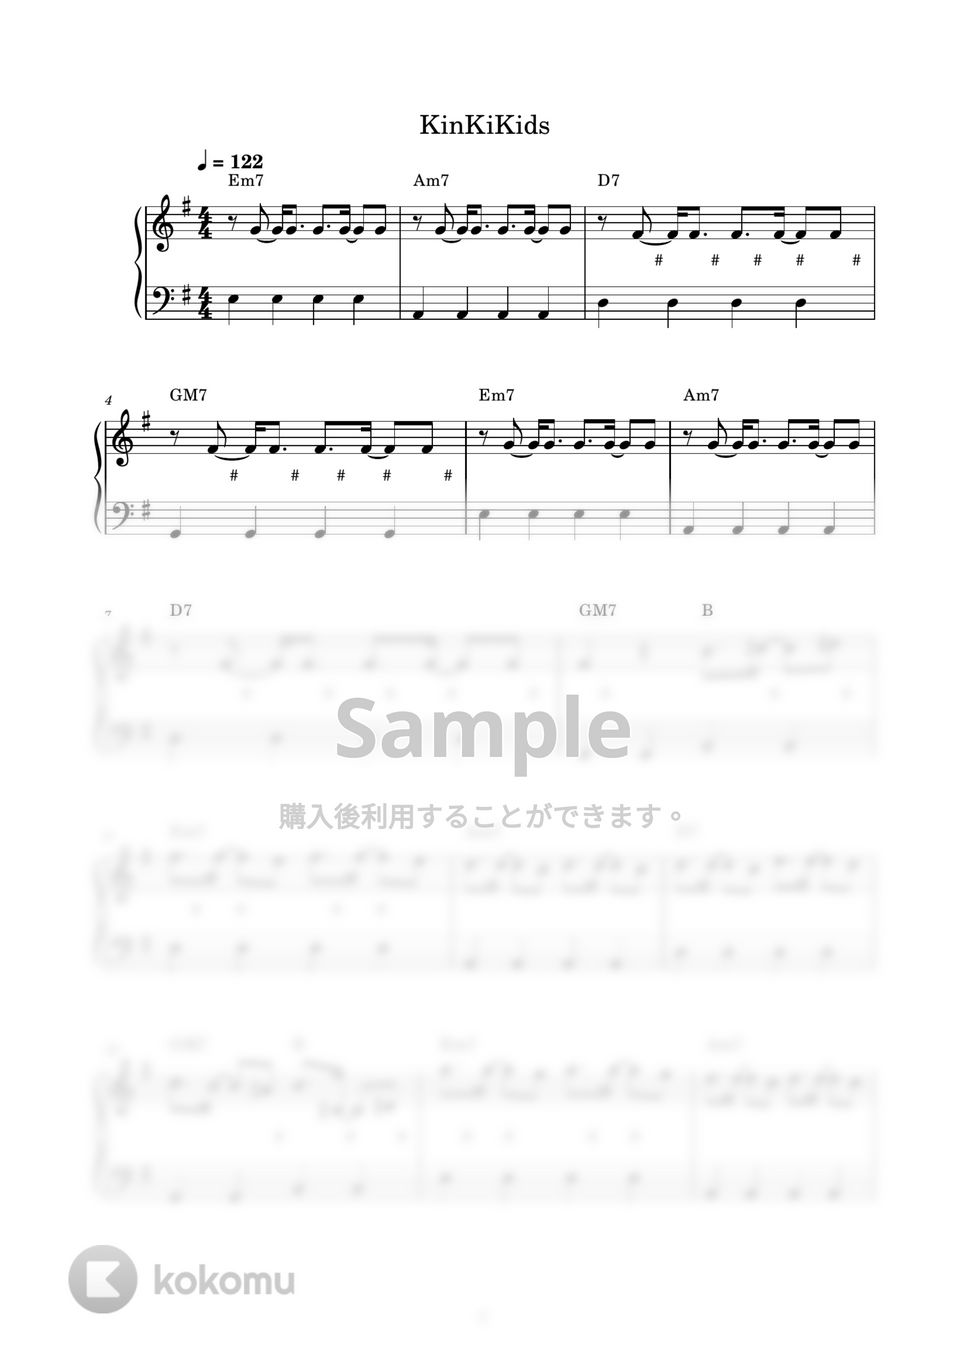 KinKiKids - 硝子の少年 (ピアノ楽譜 / かんたん両手 / 歌詞付き / ドレミ付き / 初心者向き) by piano.tokyo